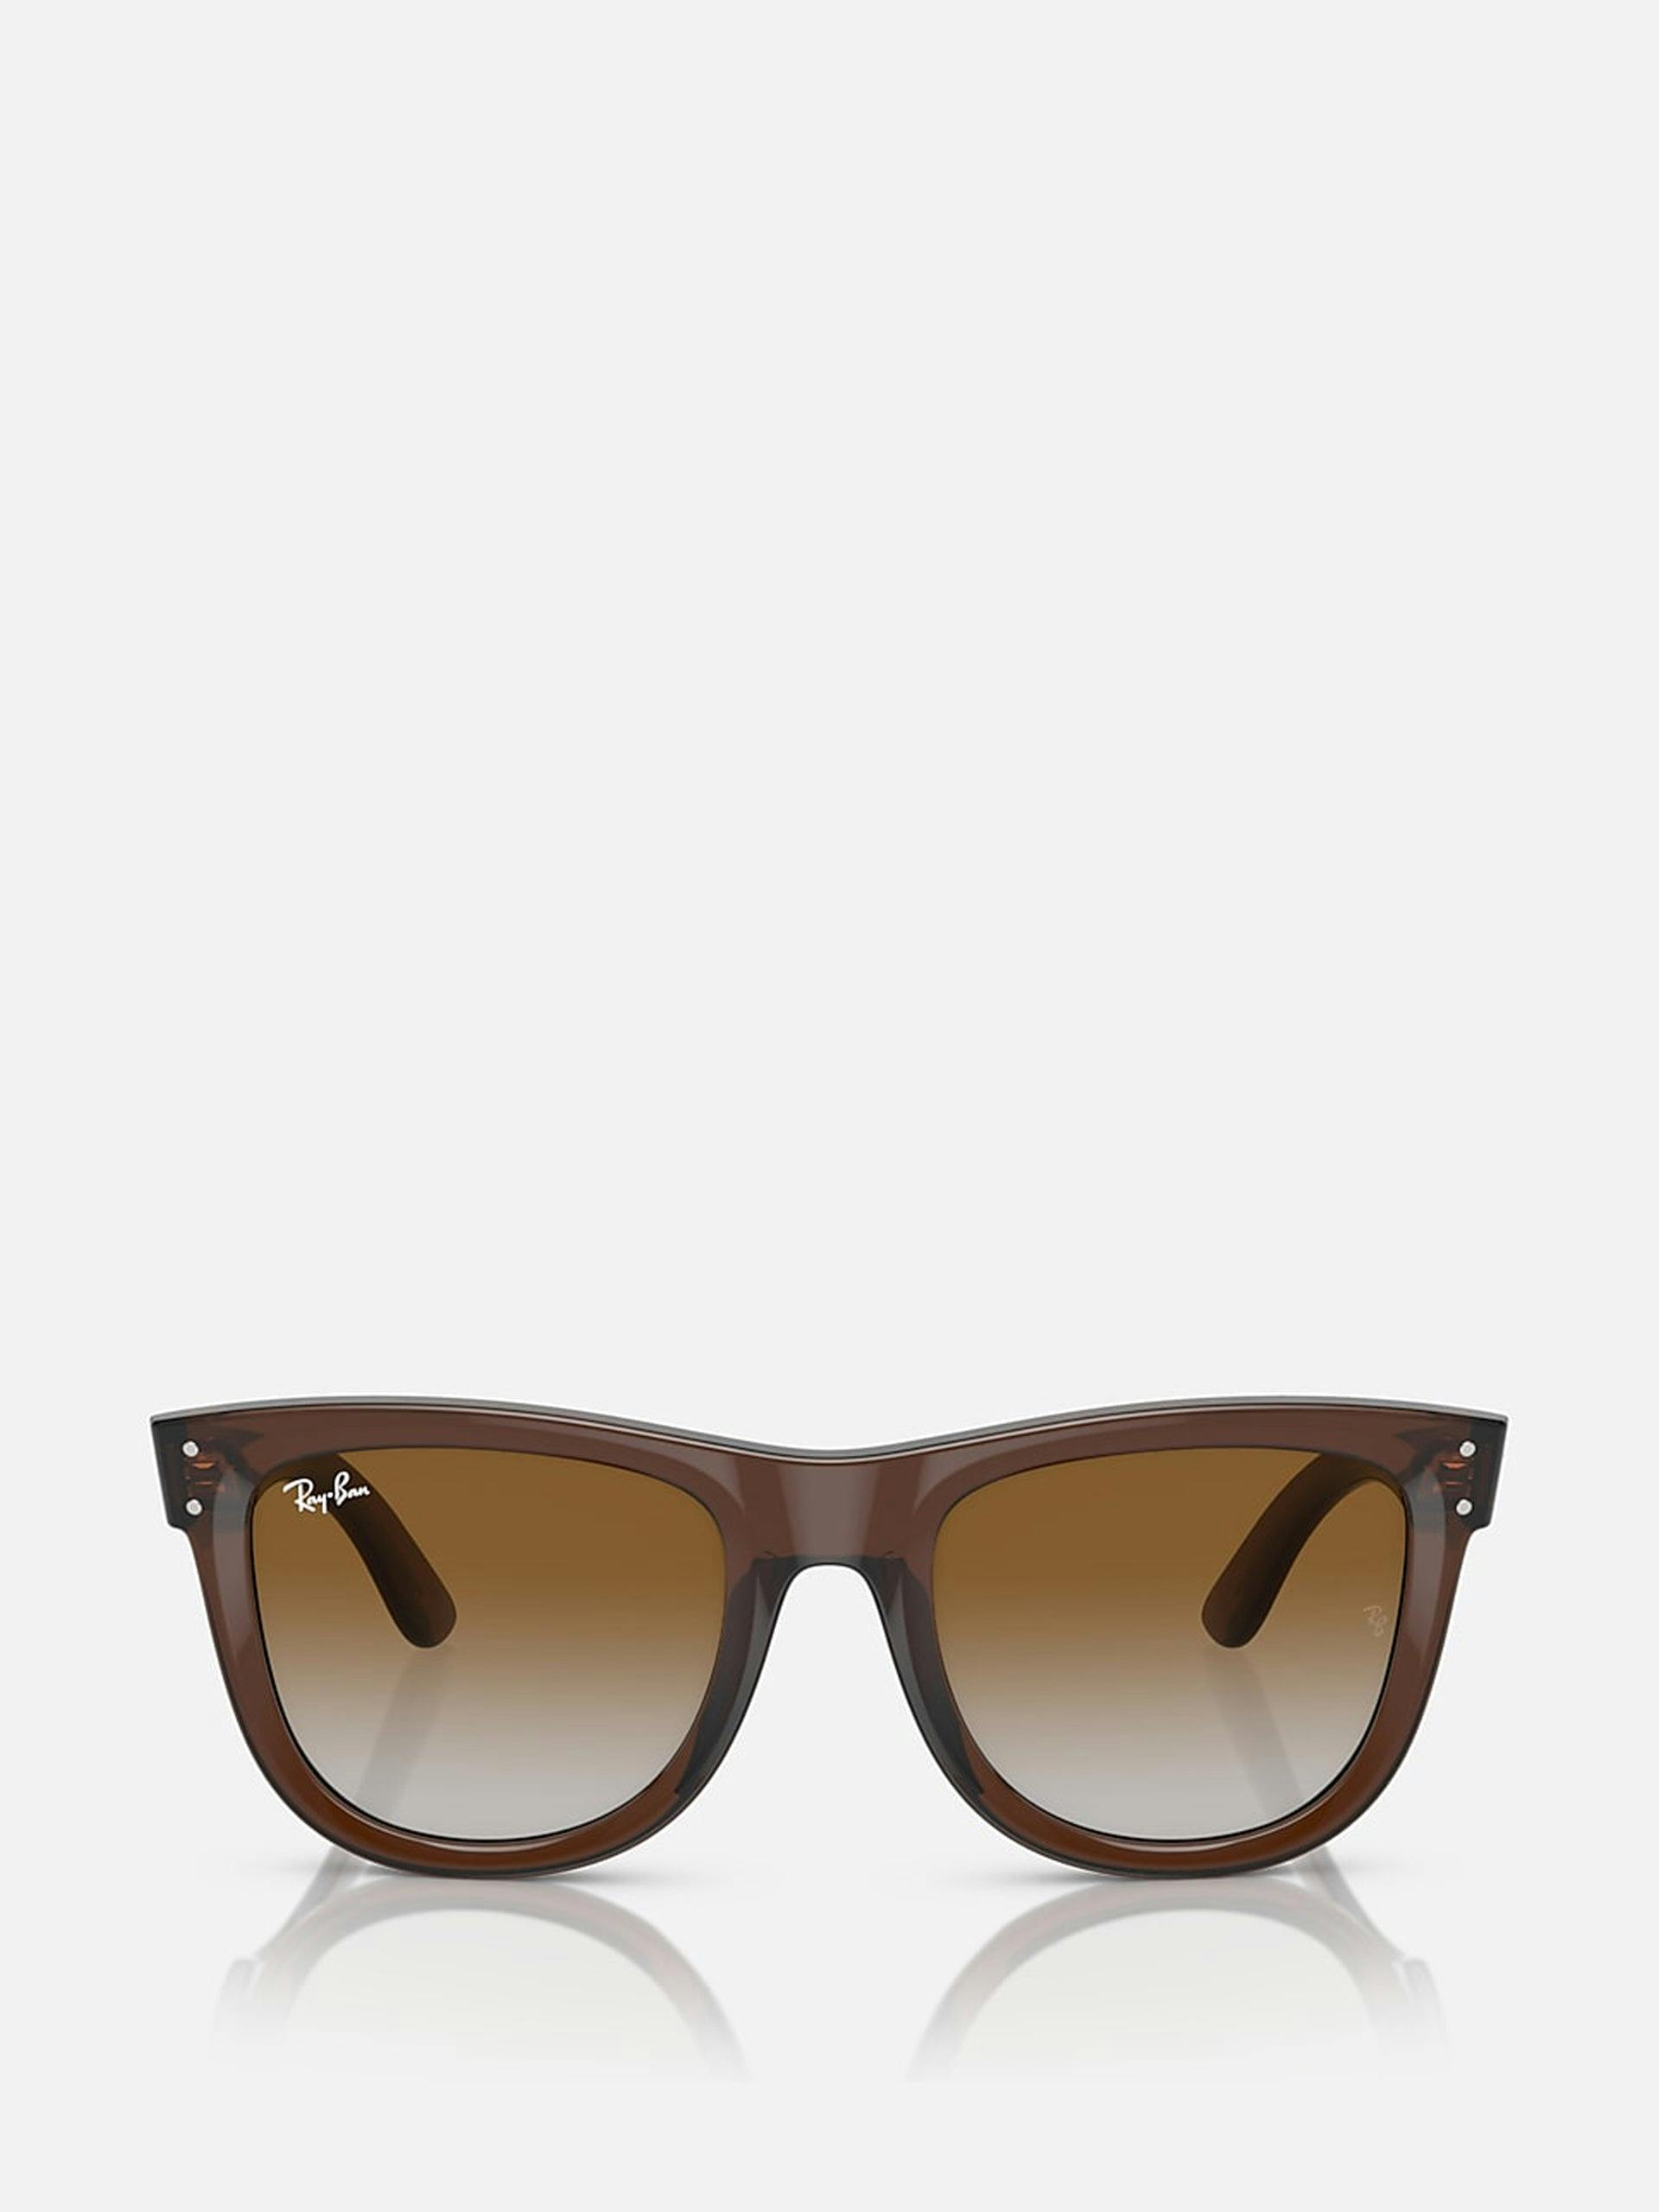 Transparent brown sunglasses